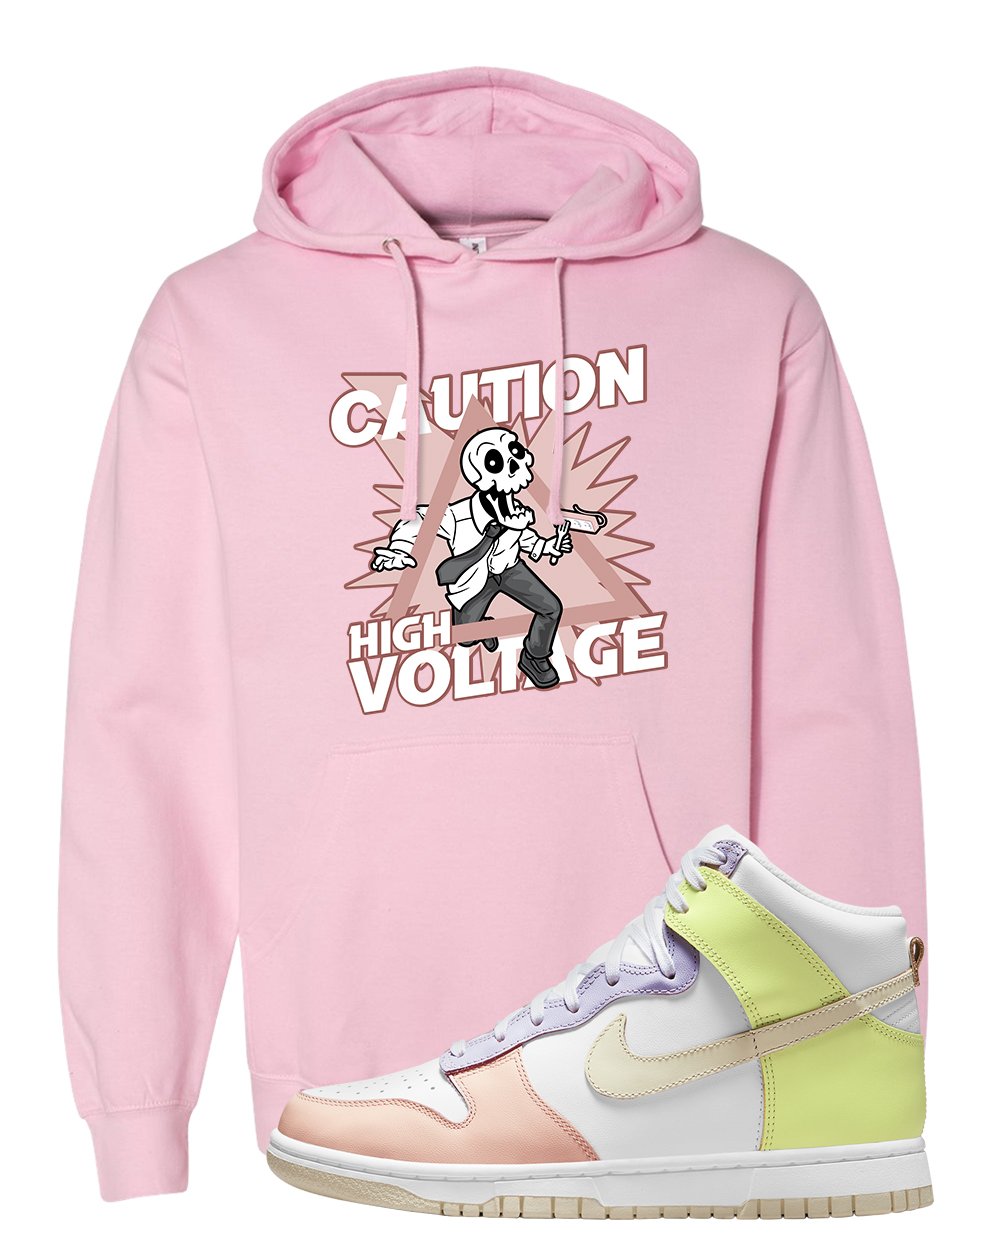 Cashmere High Dunks Hoodie | Caution High Voltage, Light Pink